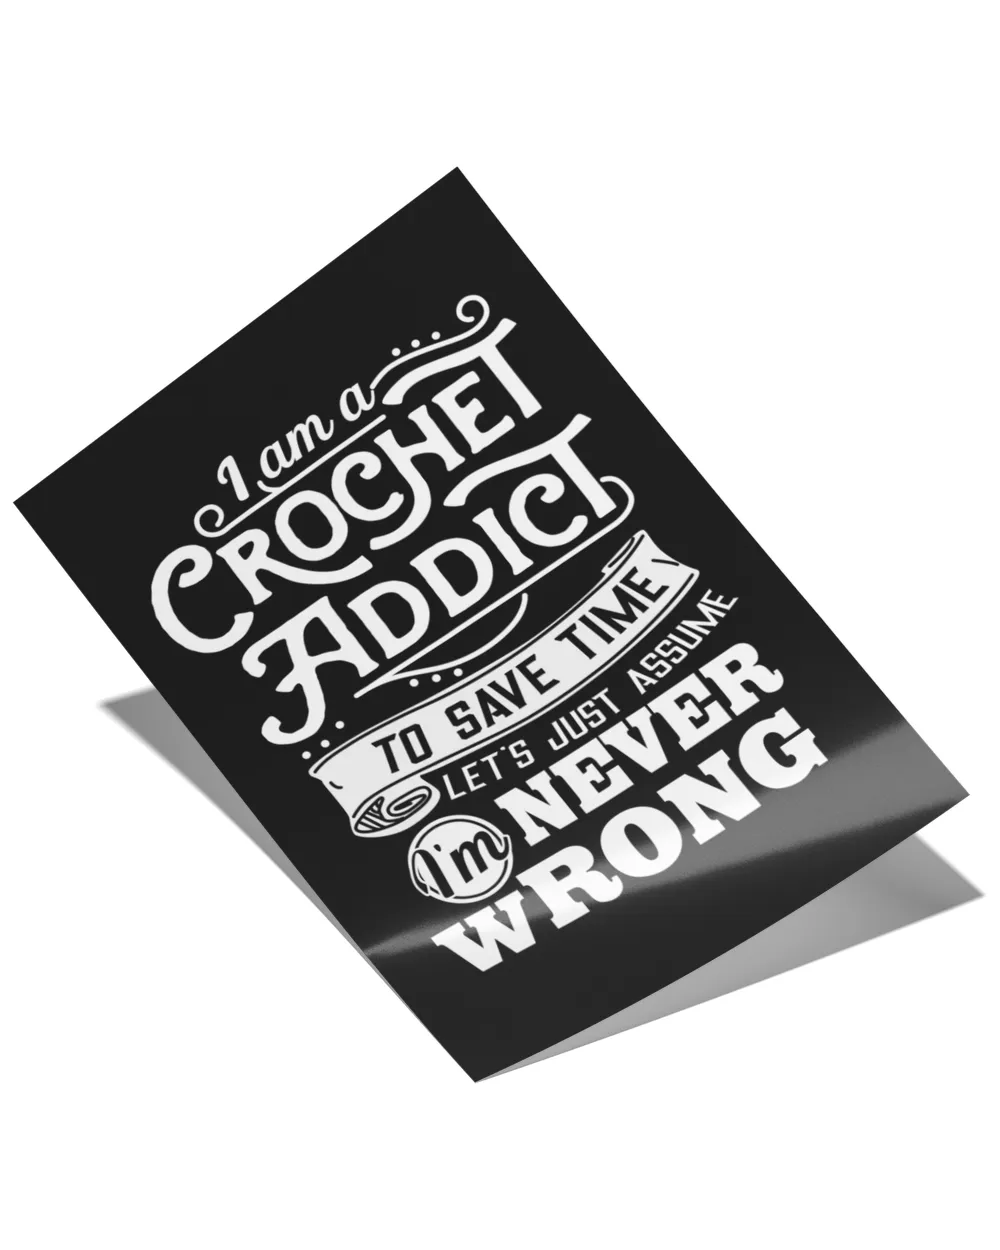 i_am_crochet_addict